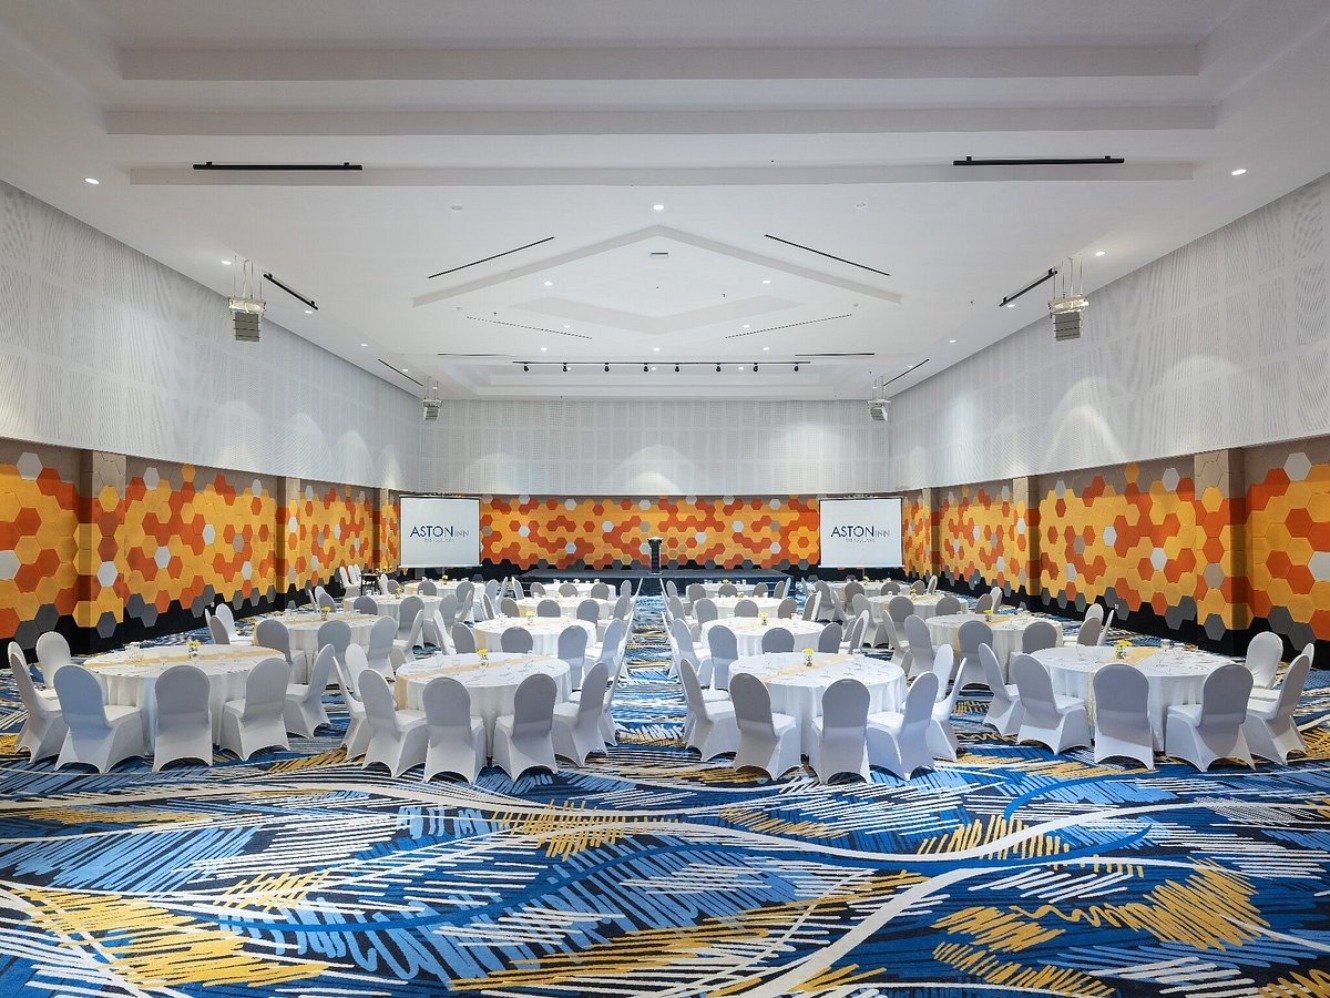 Aquamarine Ballroom di ASTON Inn Tasikmalaya. (Sumber gambar: Archipelago International)